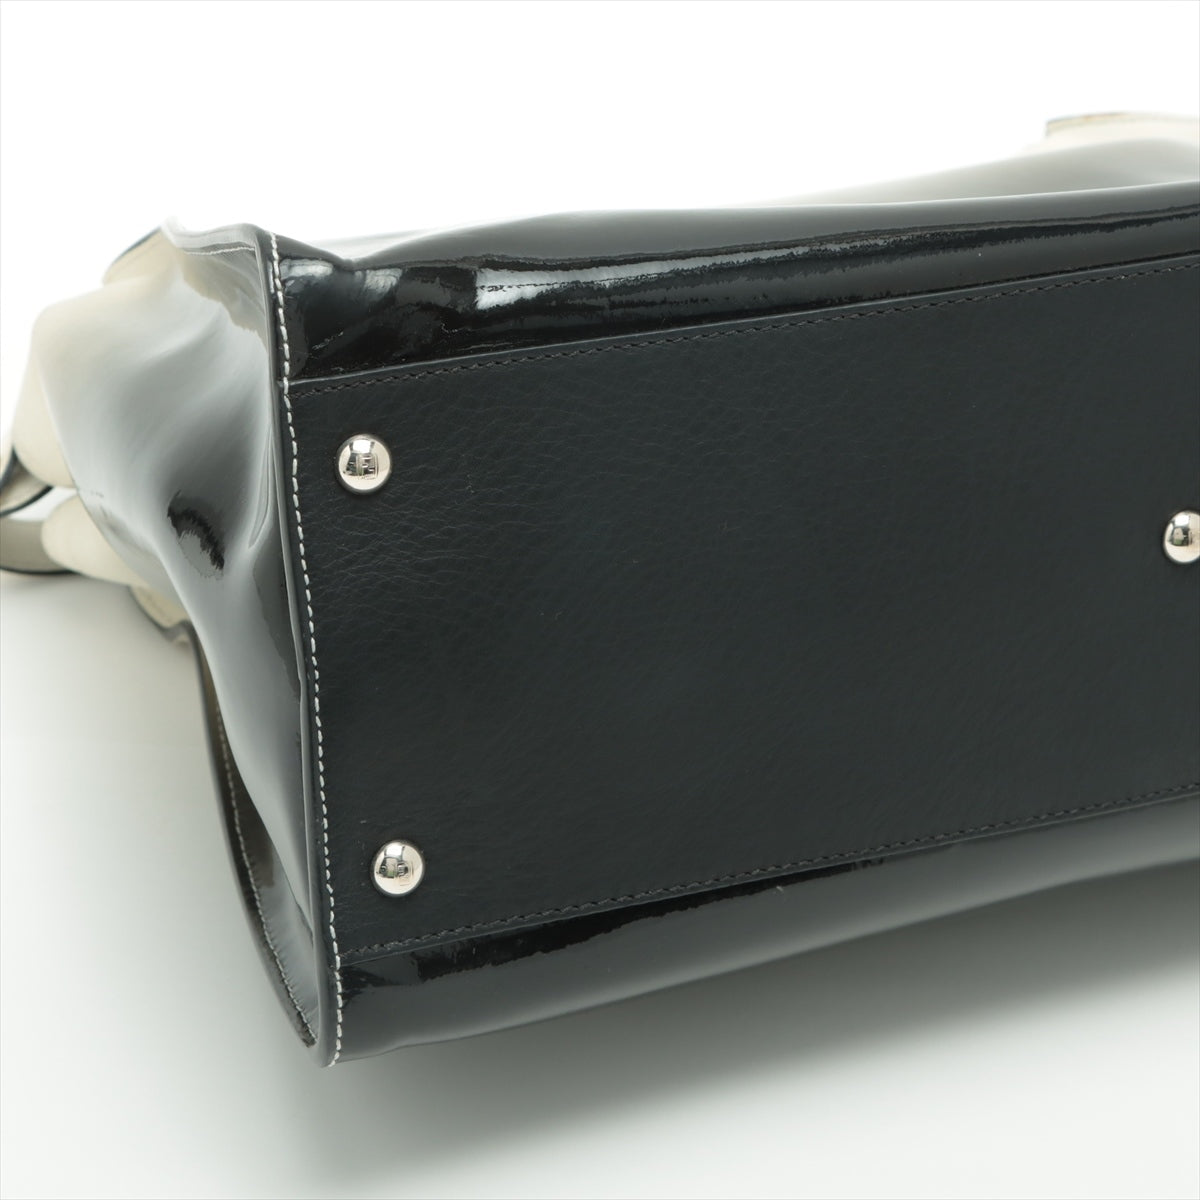 Fendi Peek-a-boo Large Patent leather 2way handbag Black 8BN210